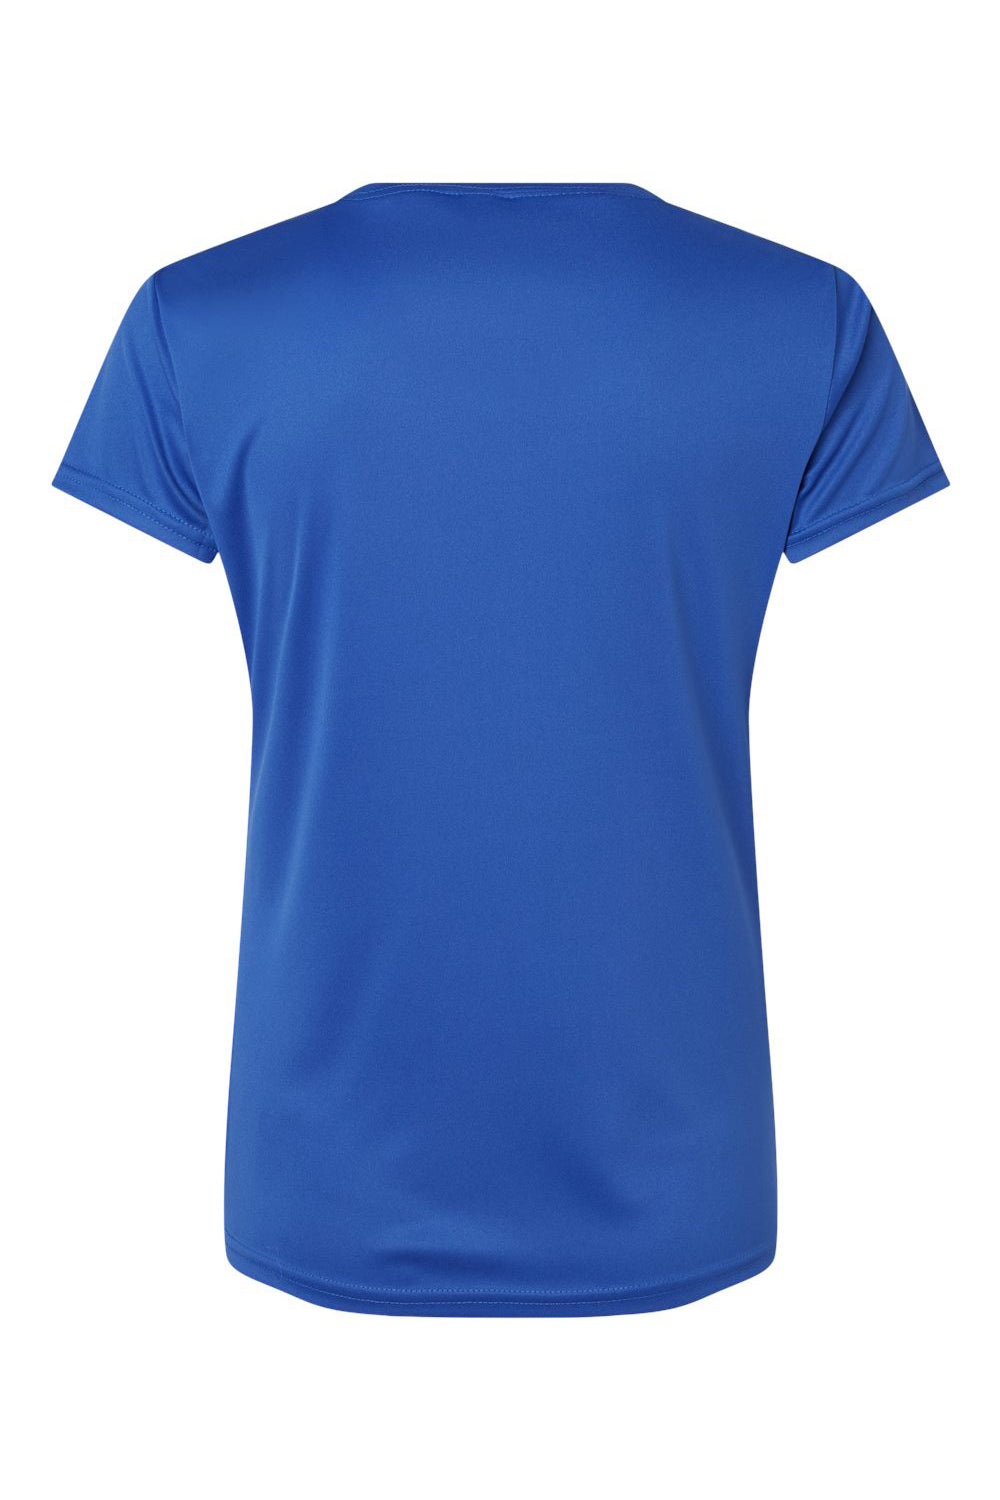 Paragon 204 Womens Islander Performance Short Sleeve Crewneck T-Shirt Royal Blue Flat Back